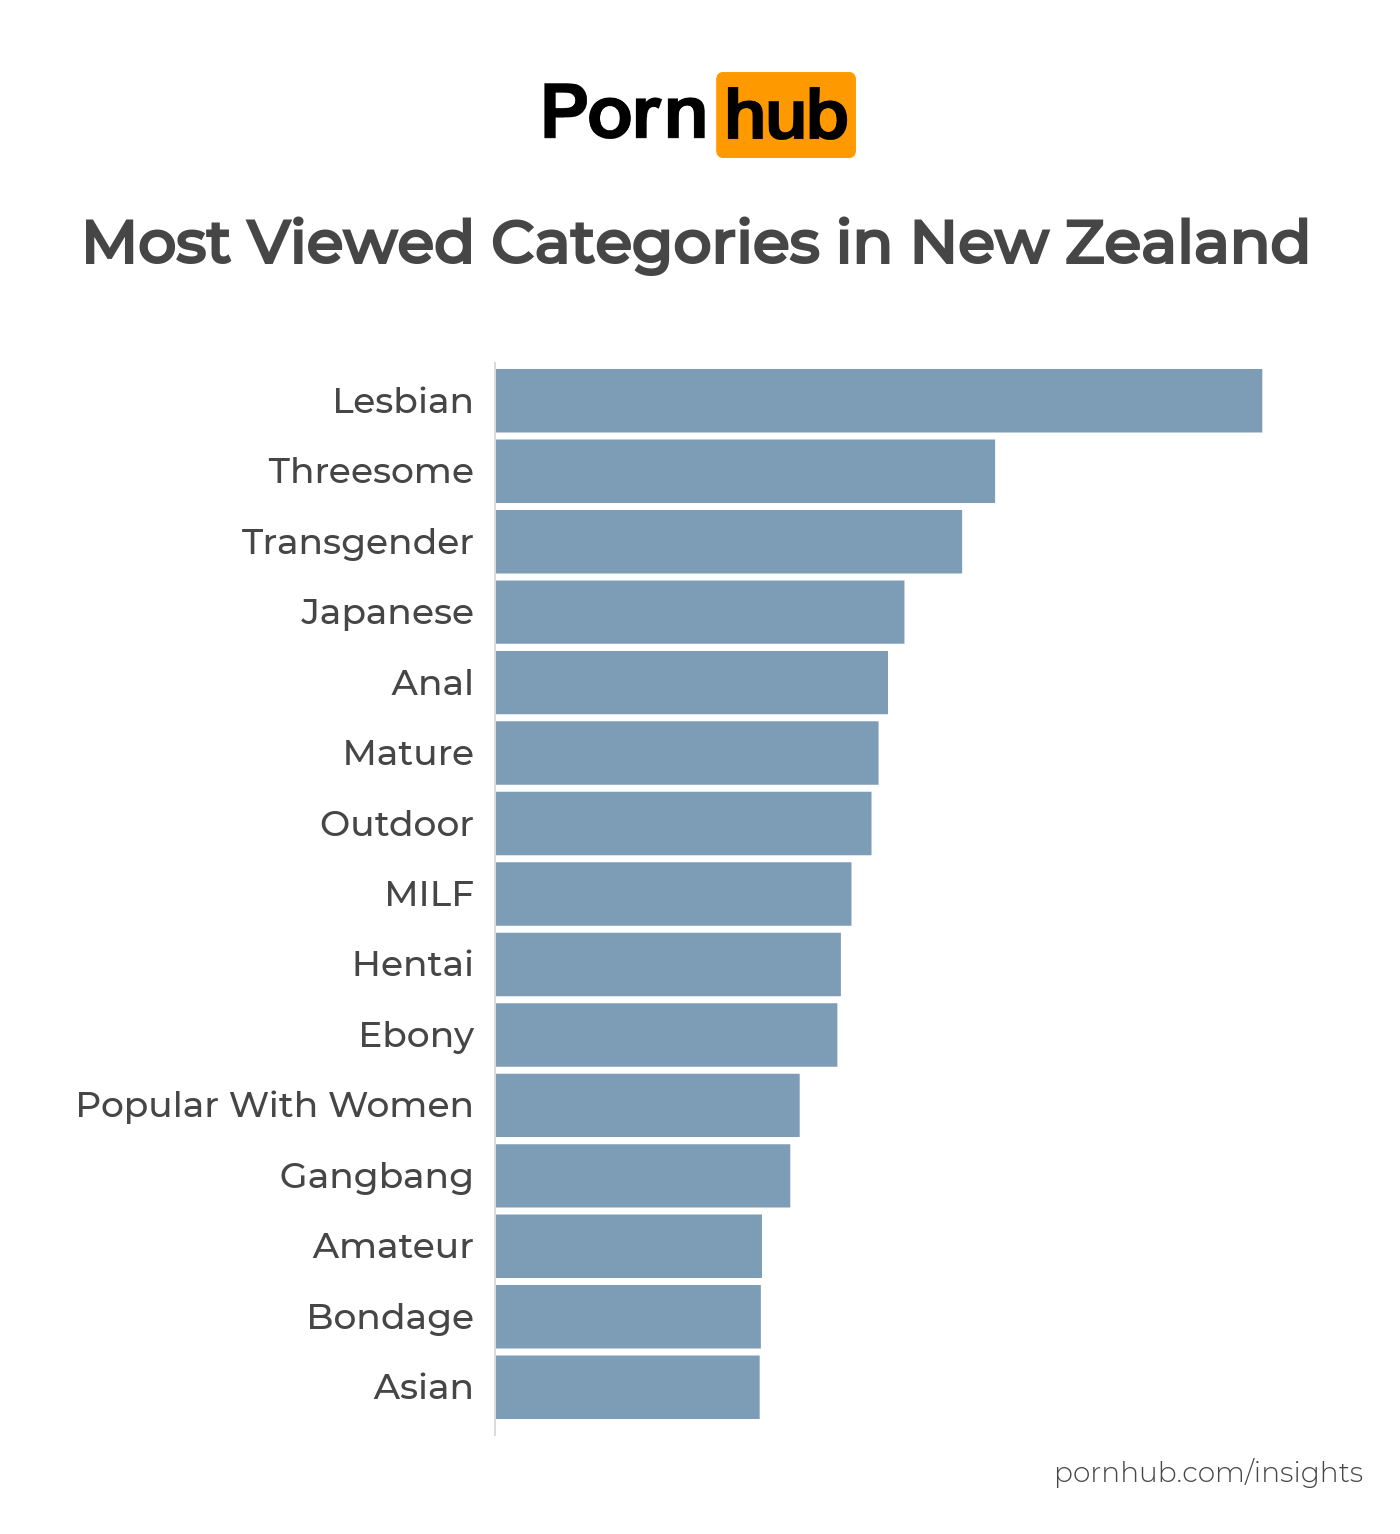 New Zealand Insights image